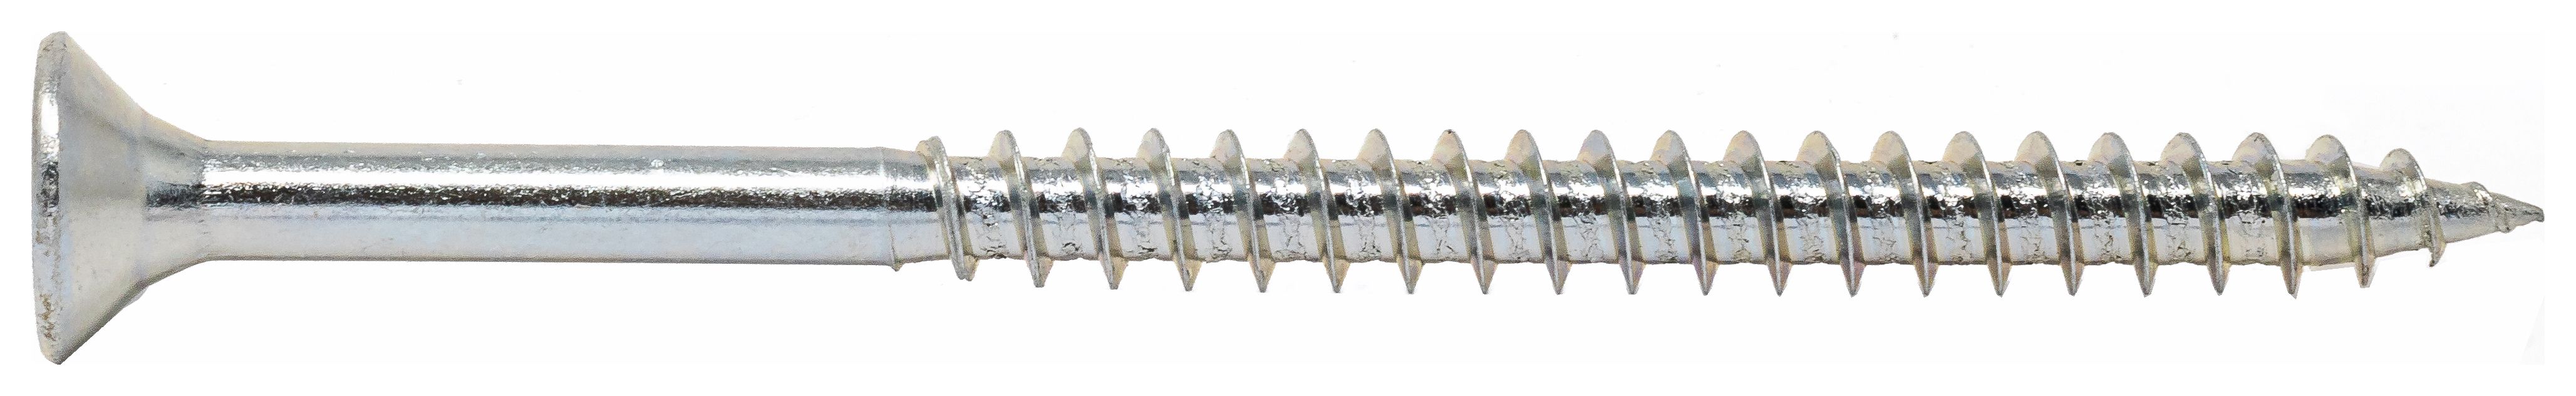 Wickes Single Thread Zinc Plated Screw - 4 X 35mm Pack Of 200